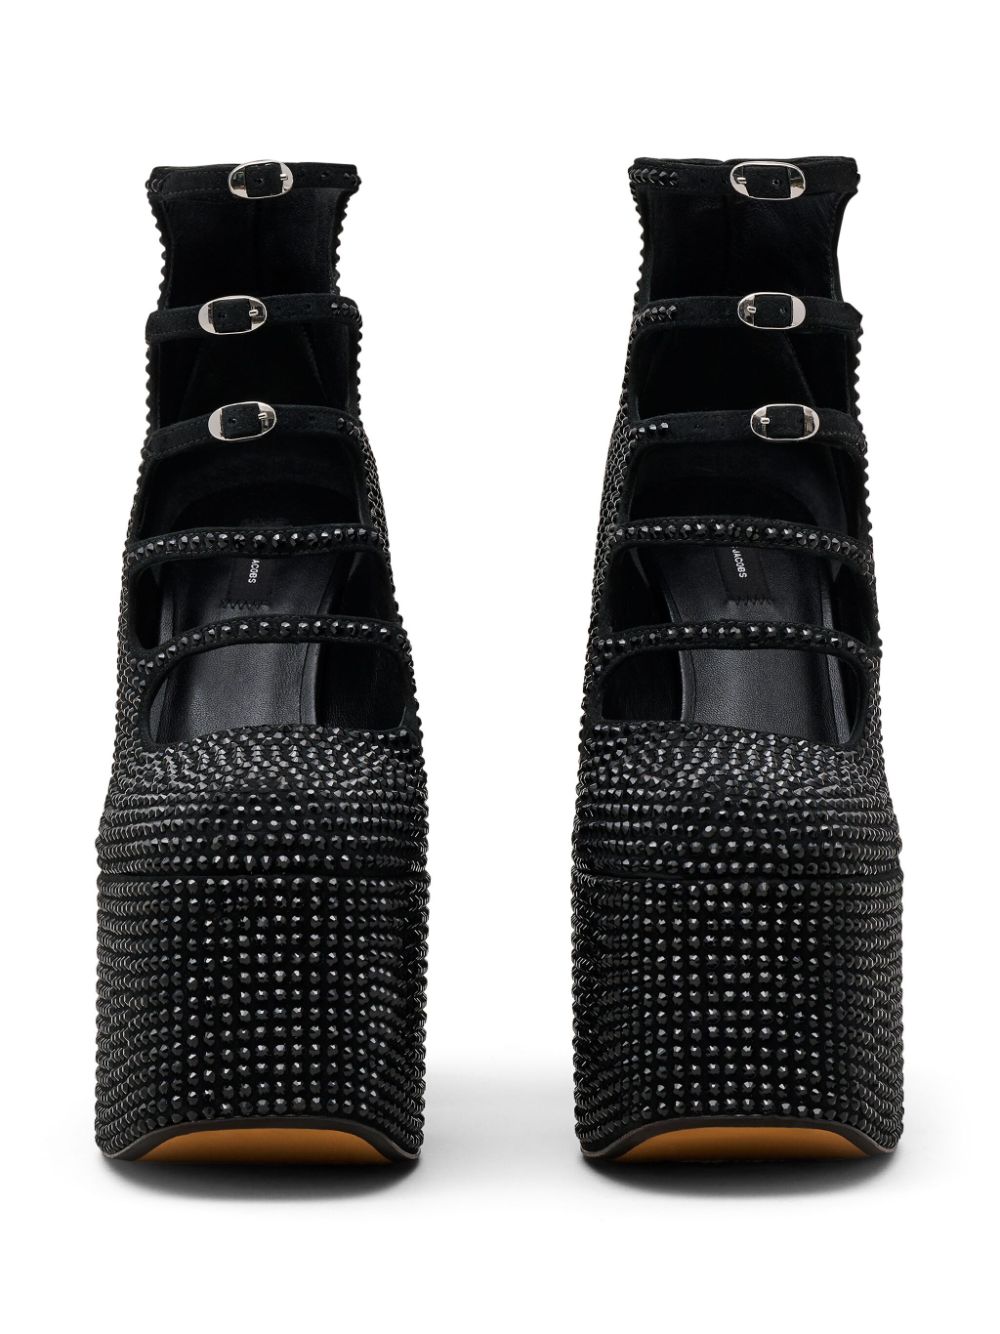 Marc Jacobs The Rhinestone Kiki 160mm Ankle Boots - Farfetch